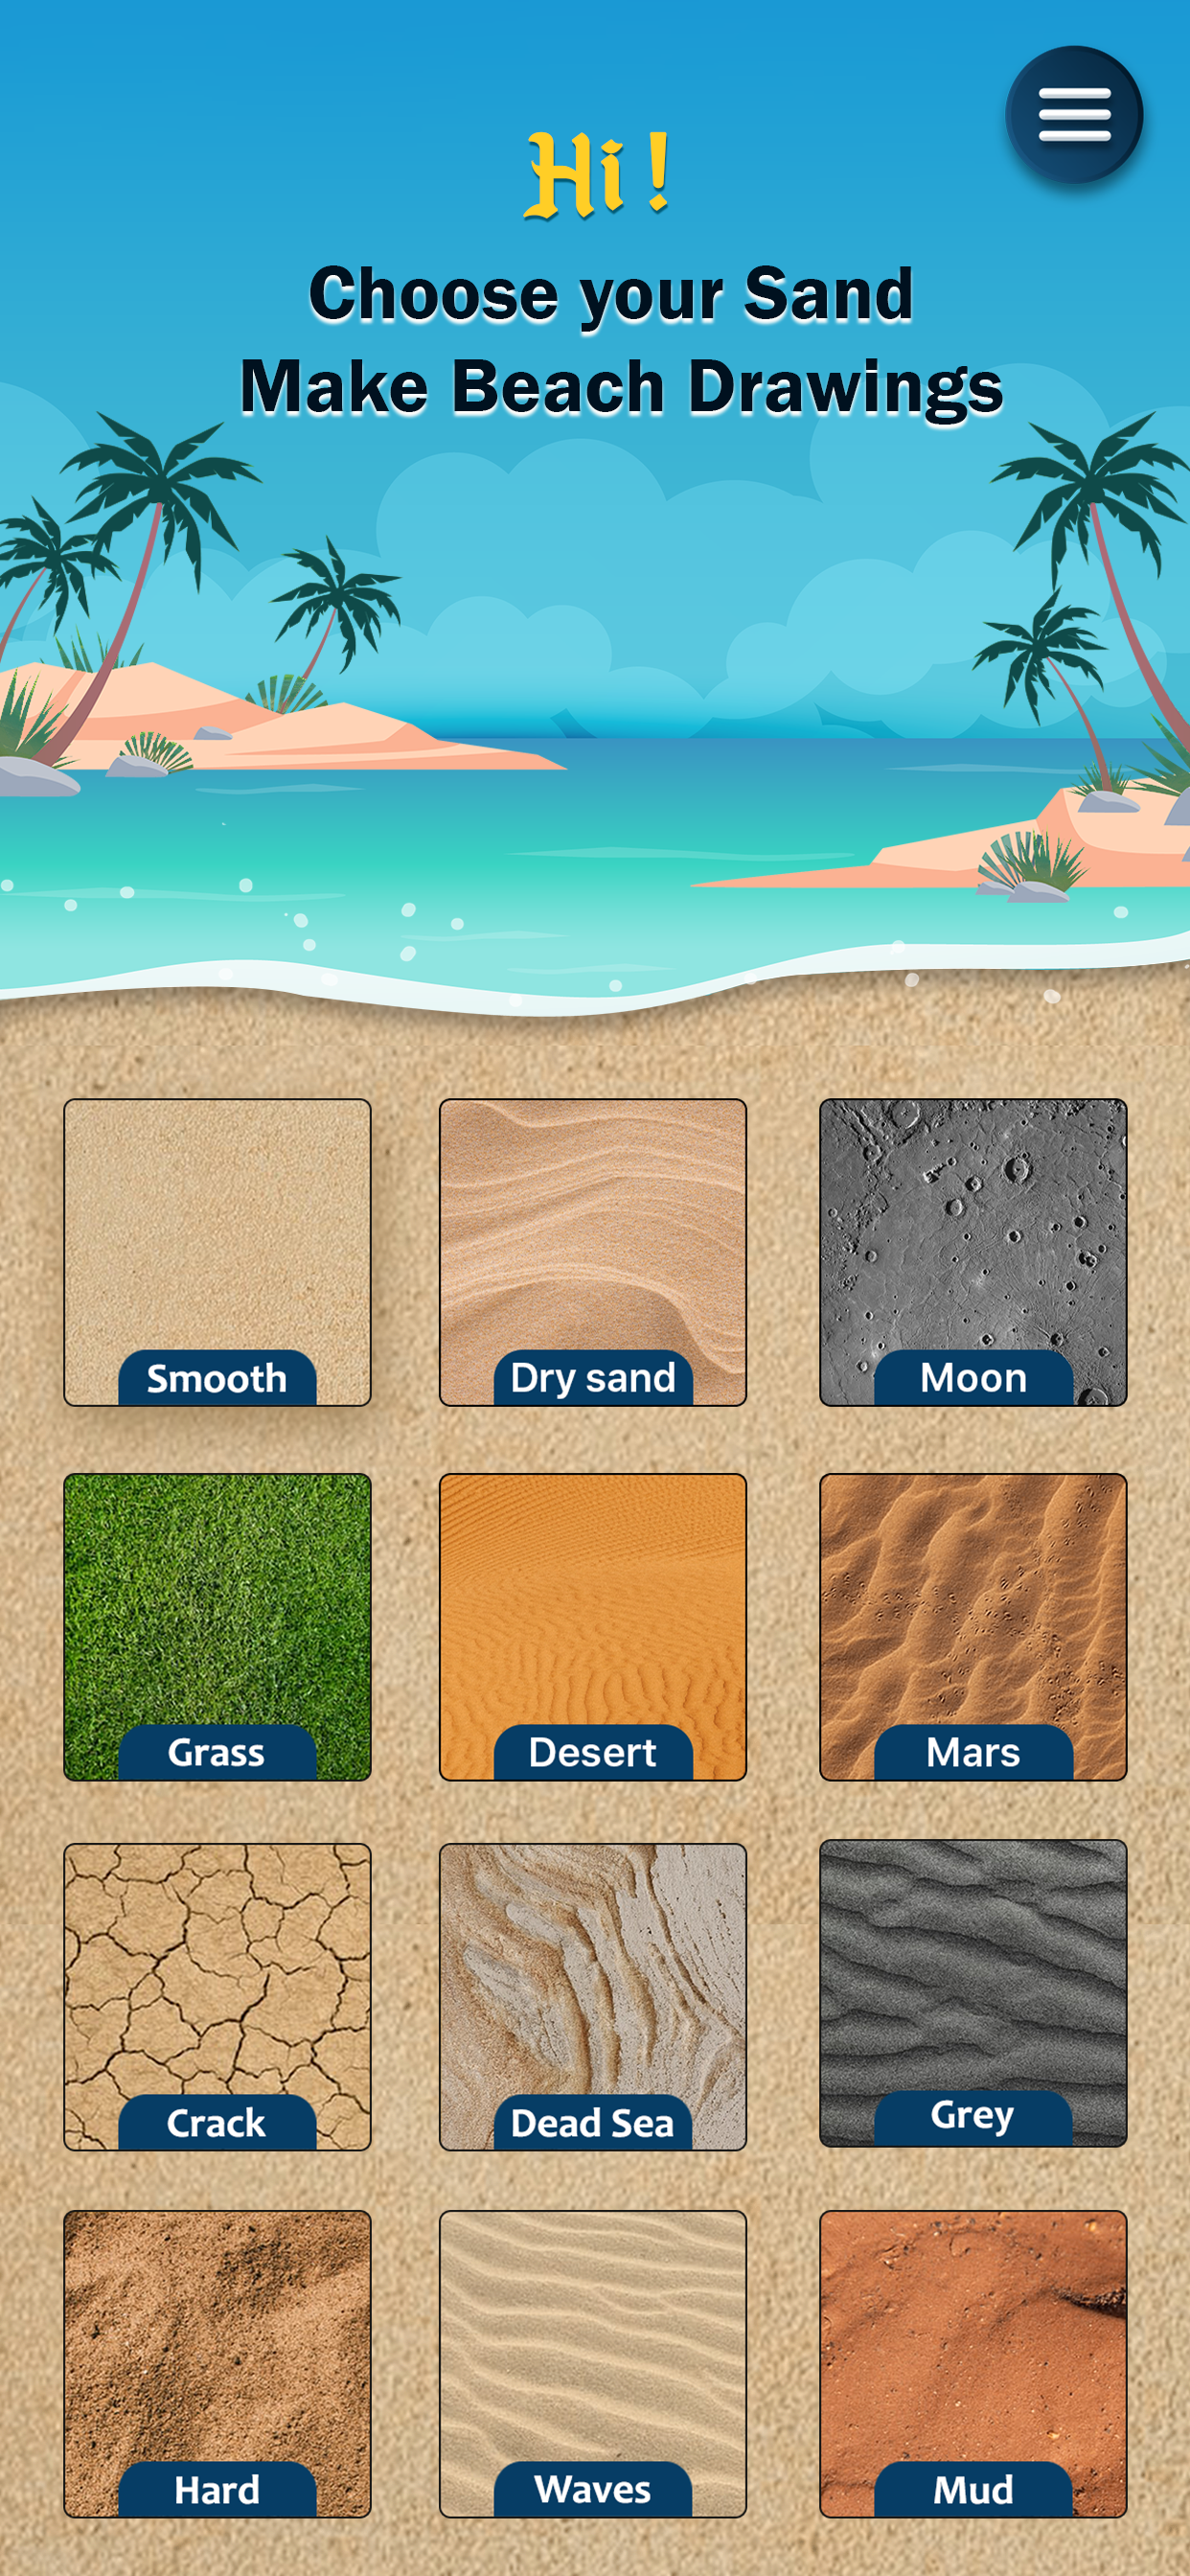 Sand draw: Make beach drawings